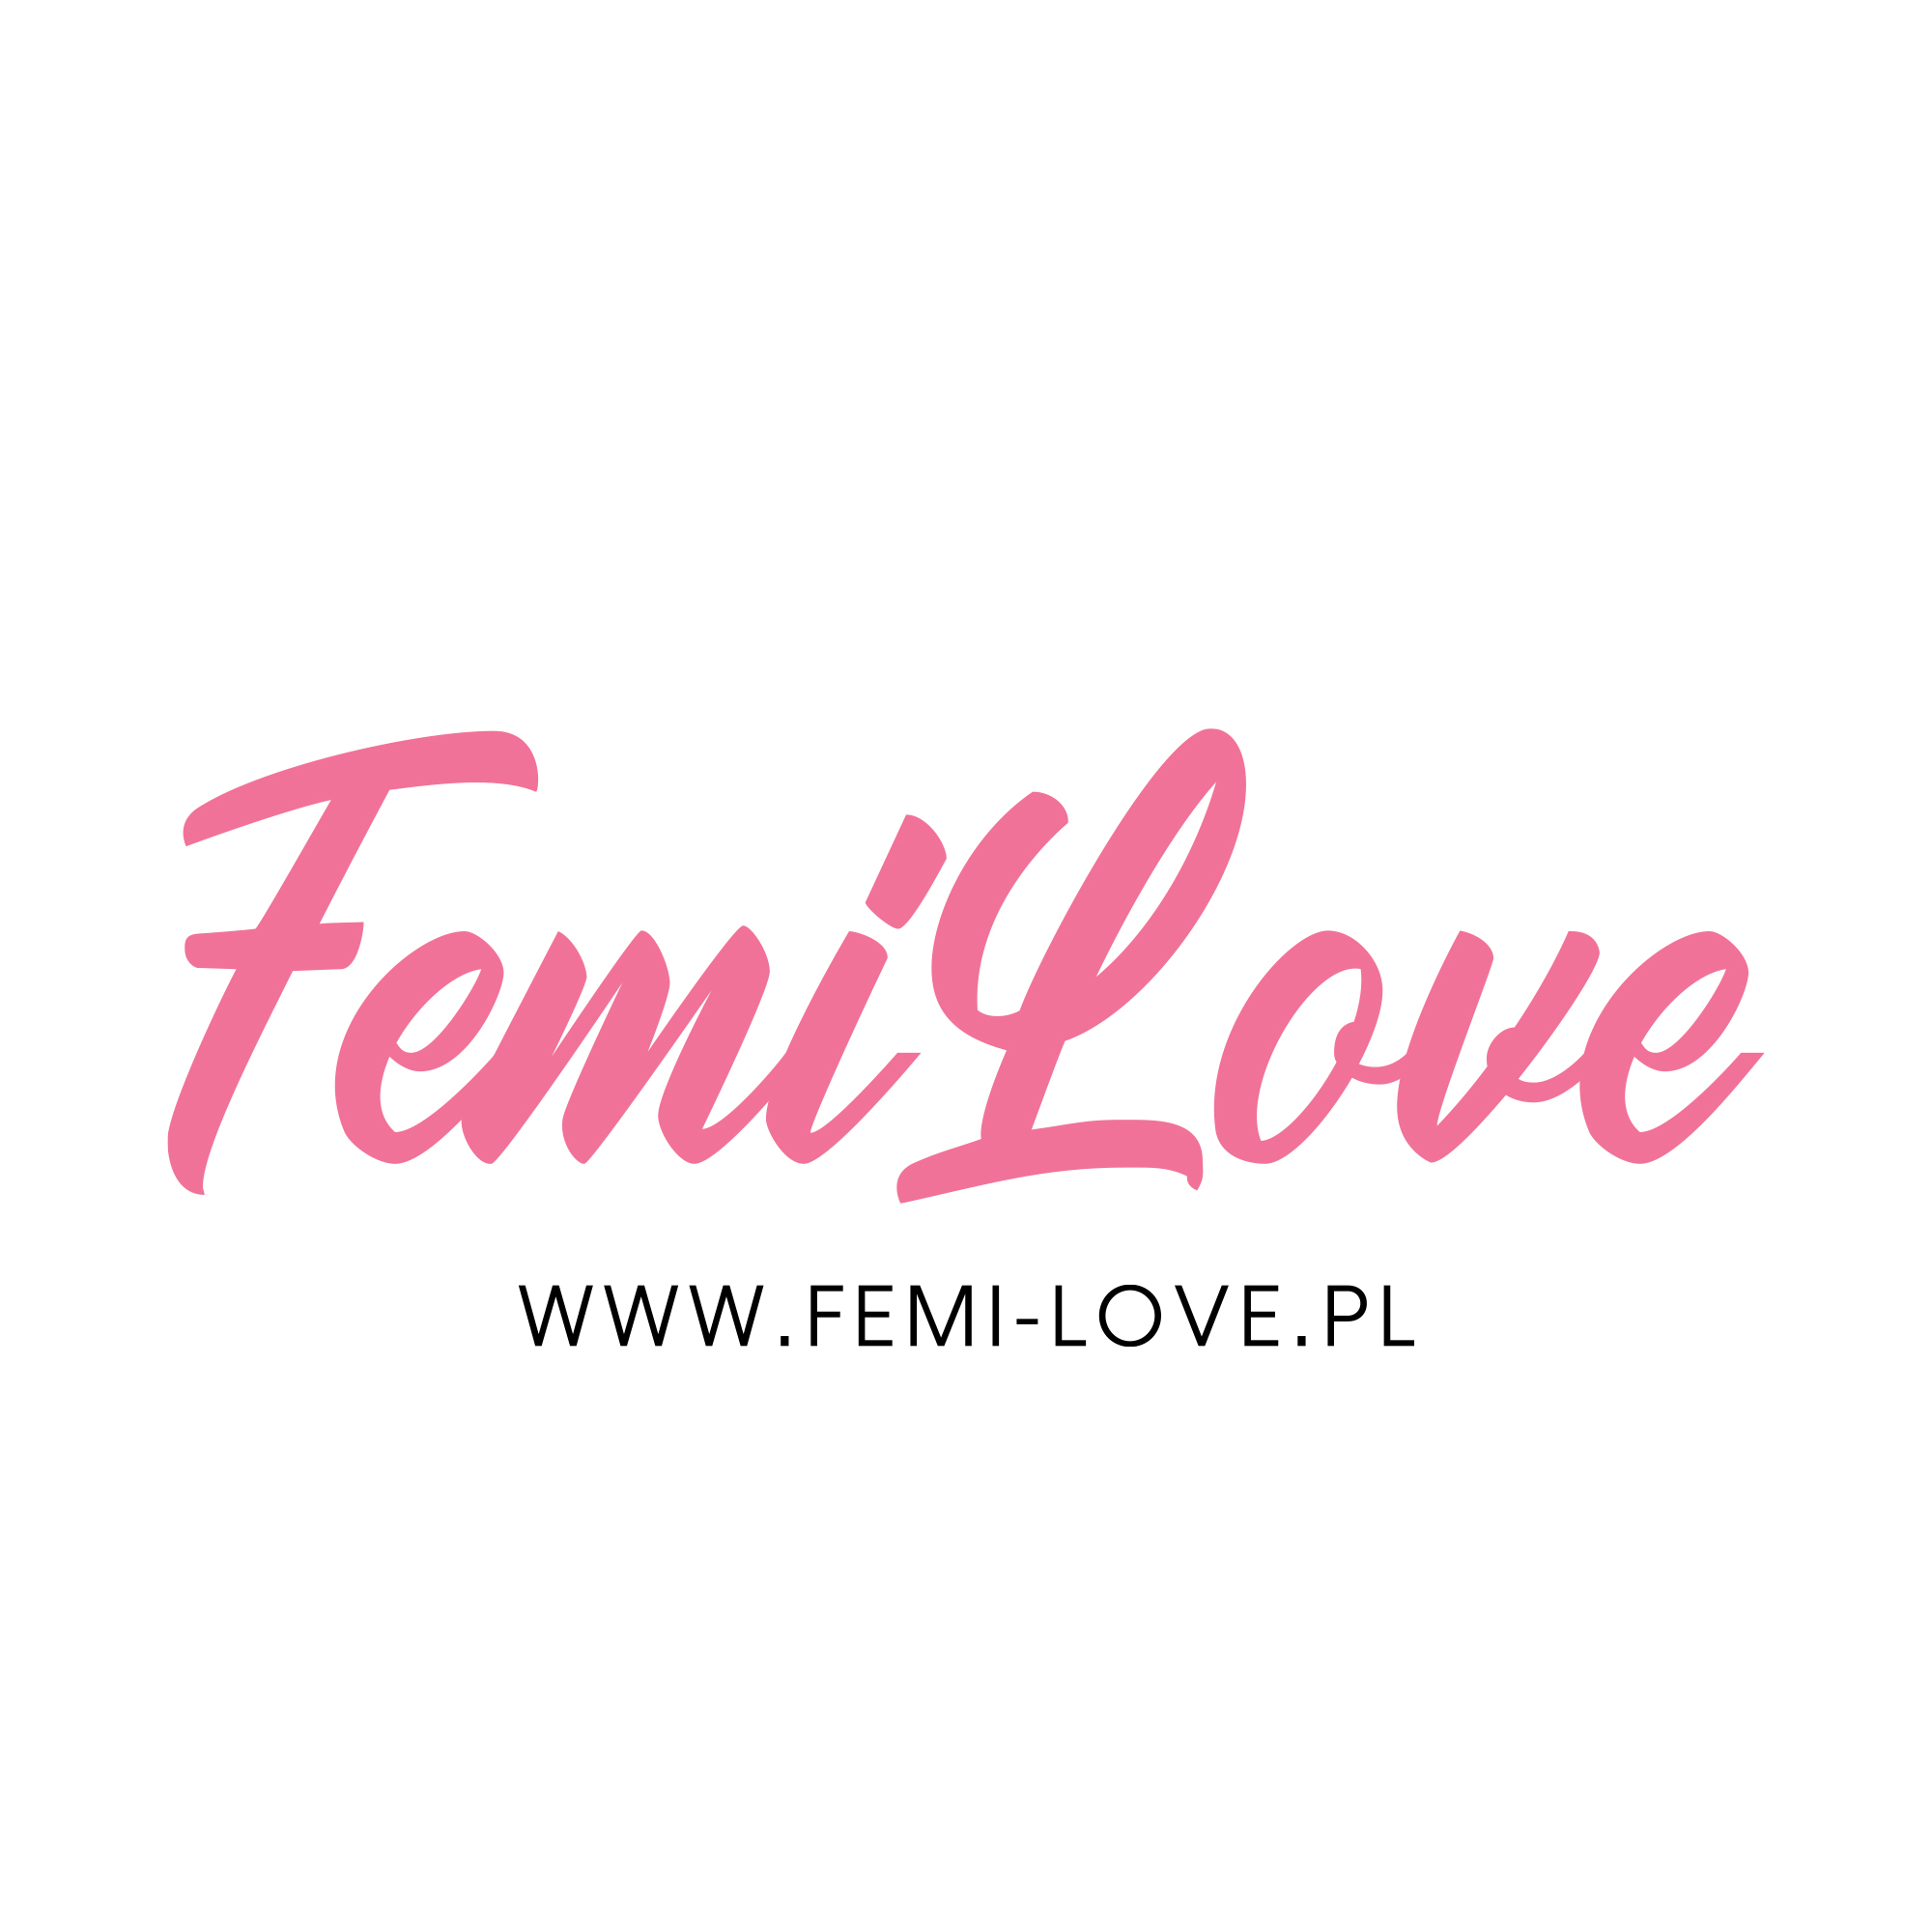 www.femi-love.pl